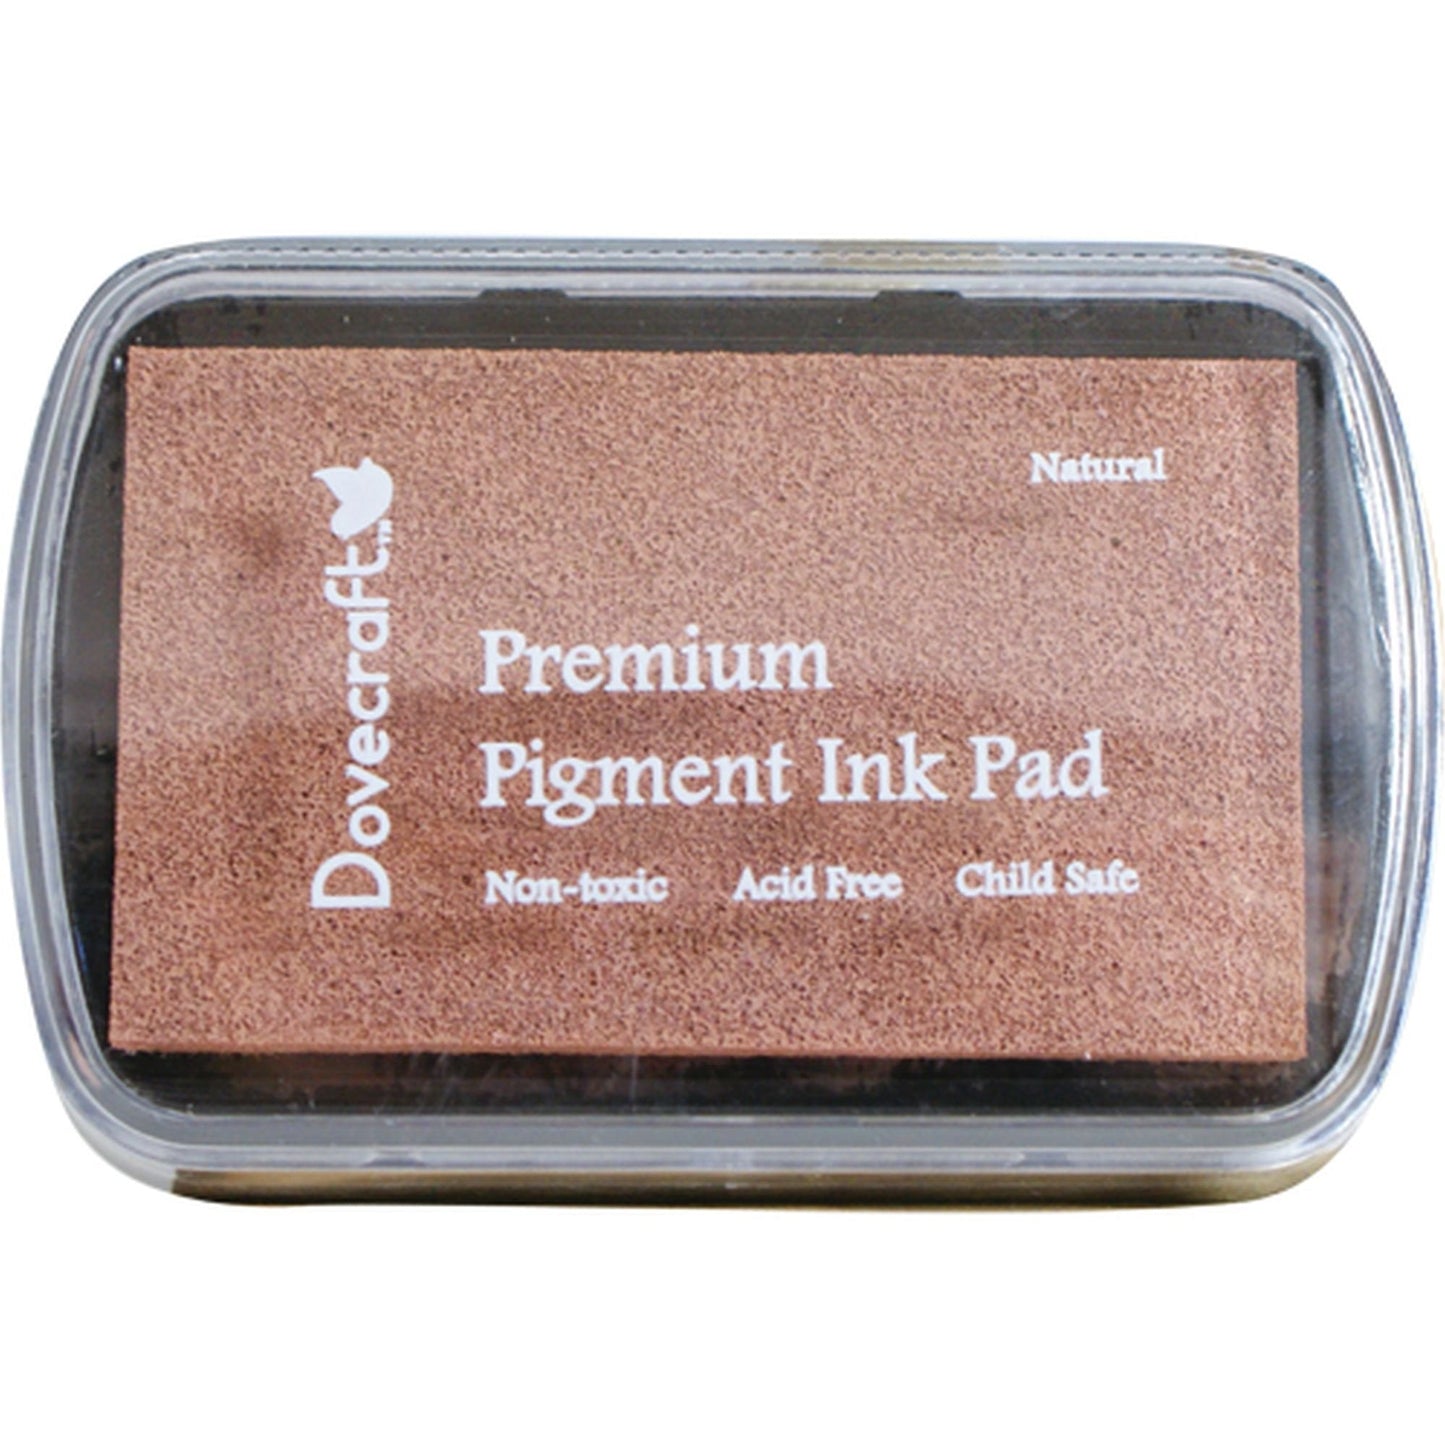 Dovecraft Pigment Ink Pad - Natural